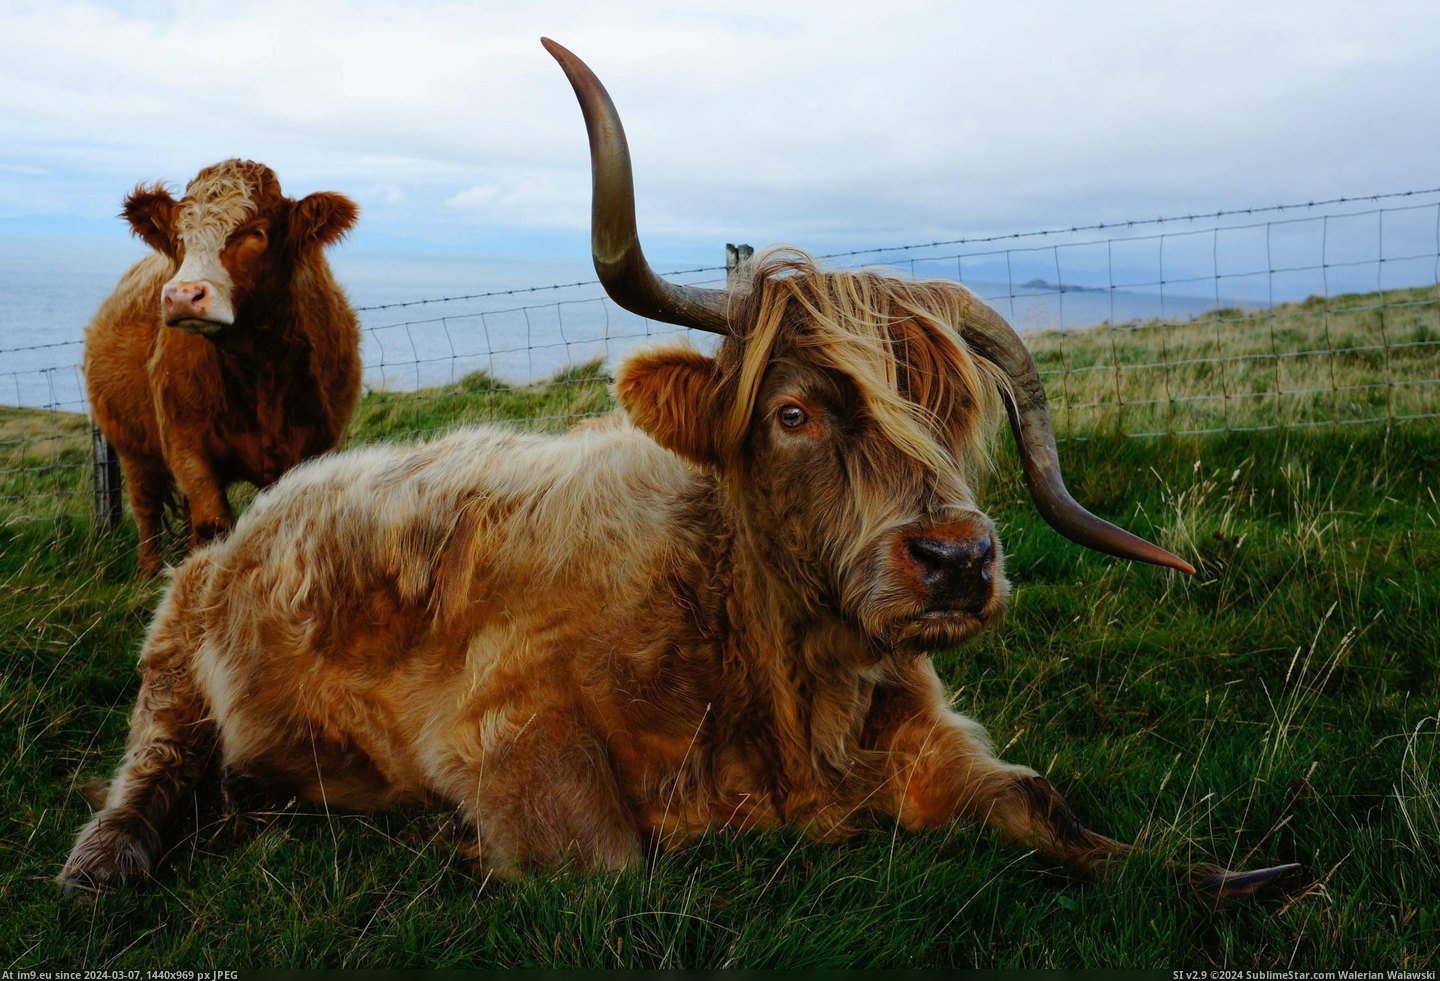 #Funny #Meet #Crazy #Kurt #Cowbain #Skye #Cow #Isle [Funny] Meet Kurt Cowbain, the crazy cow from the Isle of Skye. Pic. (Изображение из альбом My r/FUNNY favs))